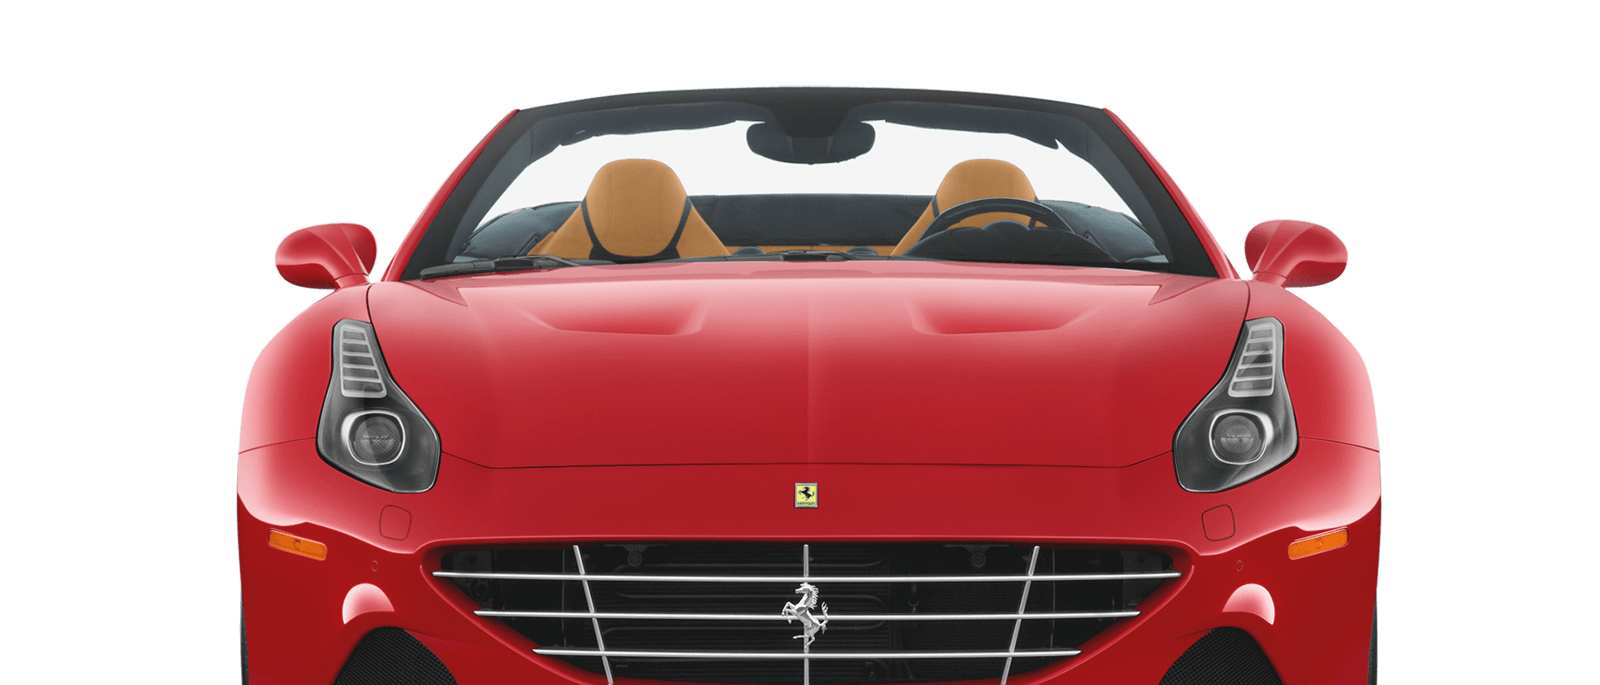 Convertible Ferrari PNG Pic